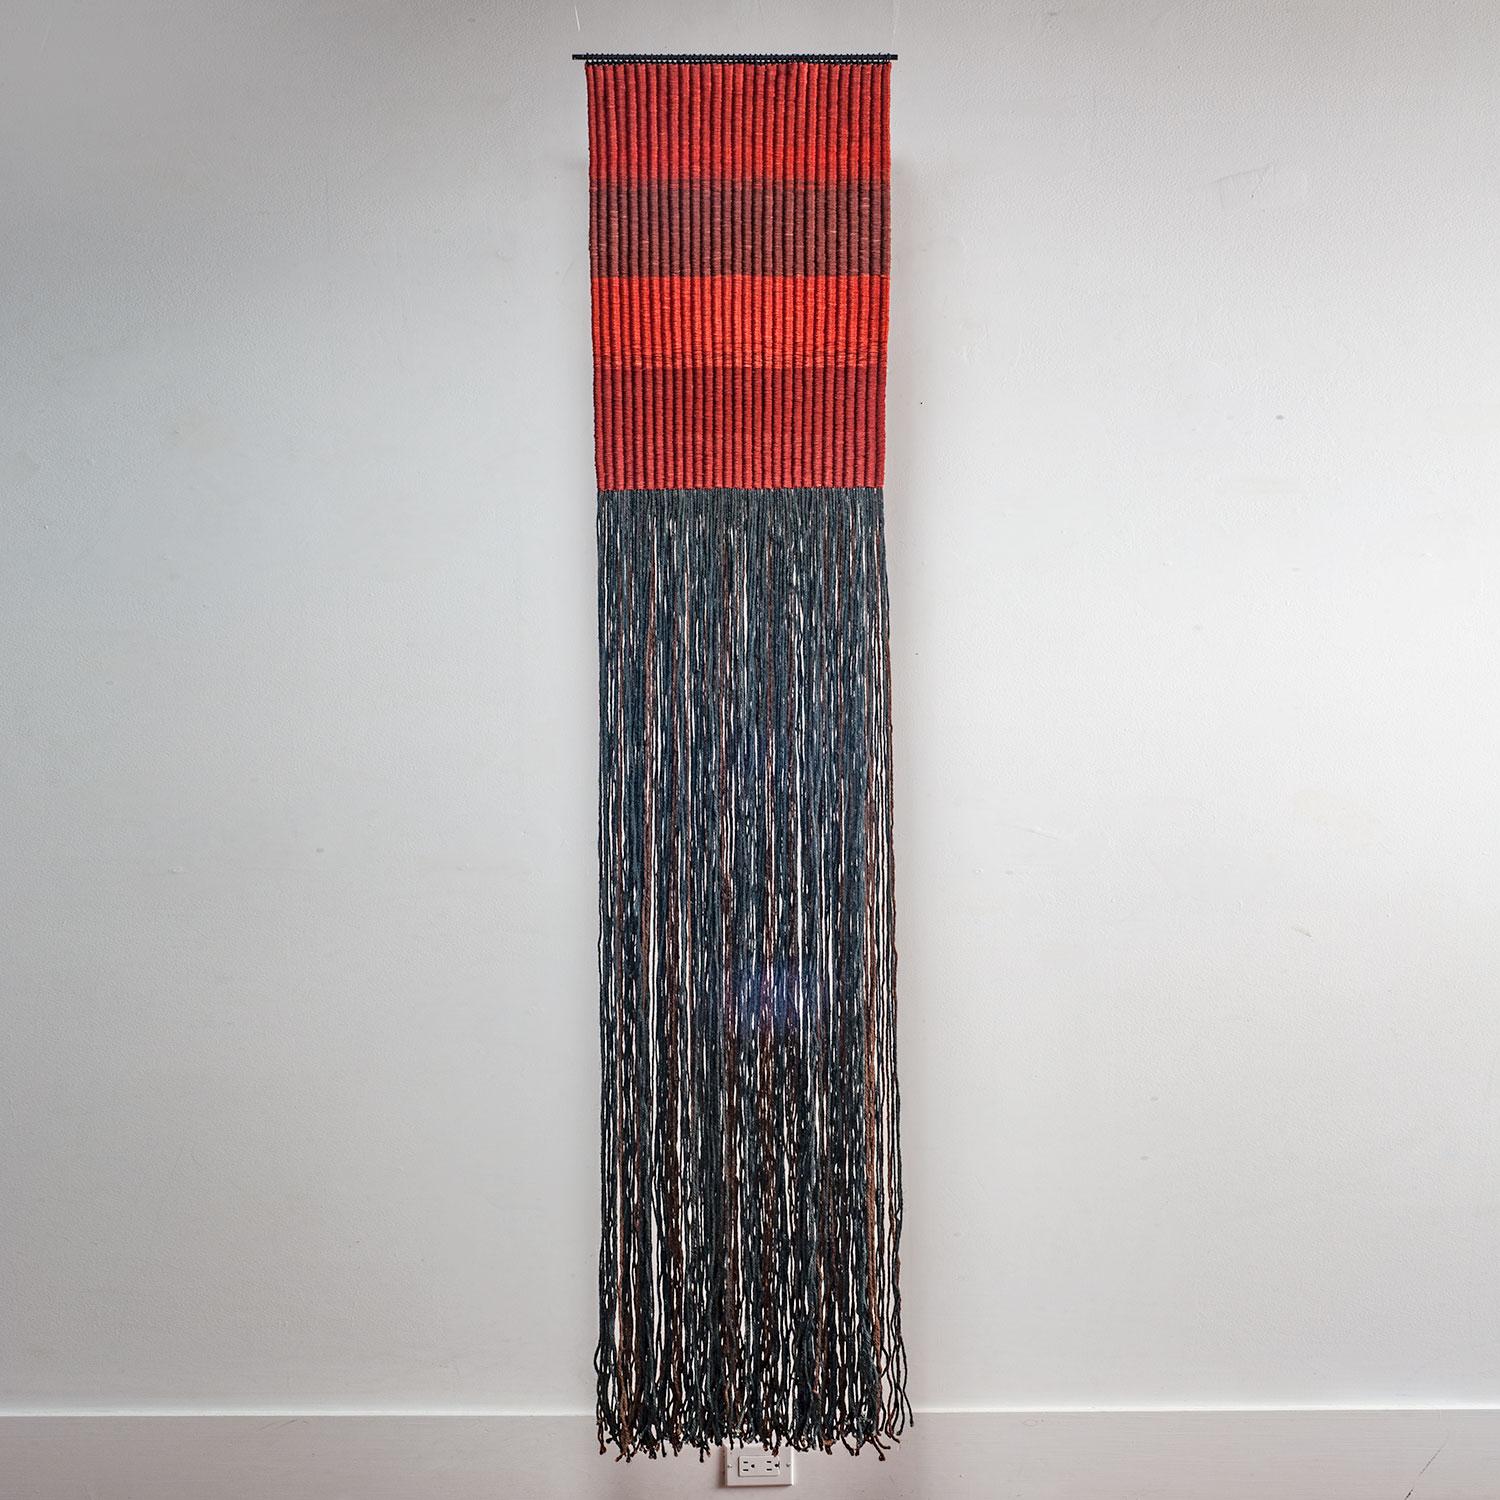 Rojo, Carolina Yrarrázaval, handwoven textile